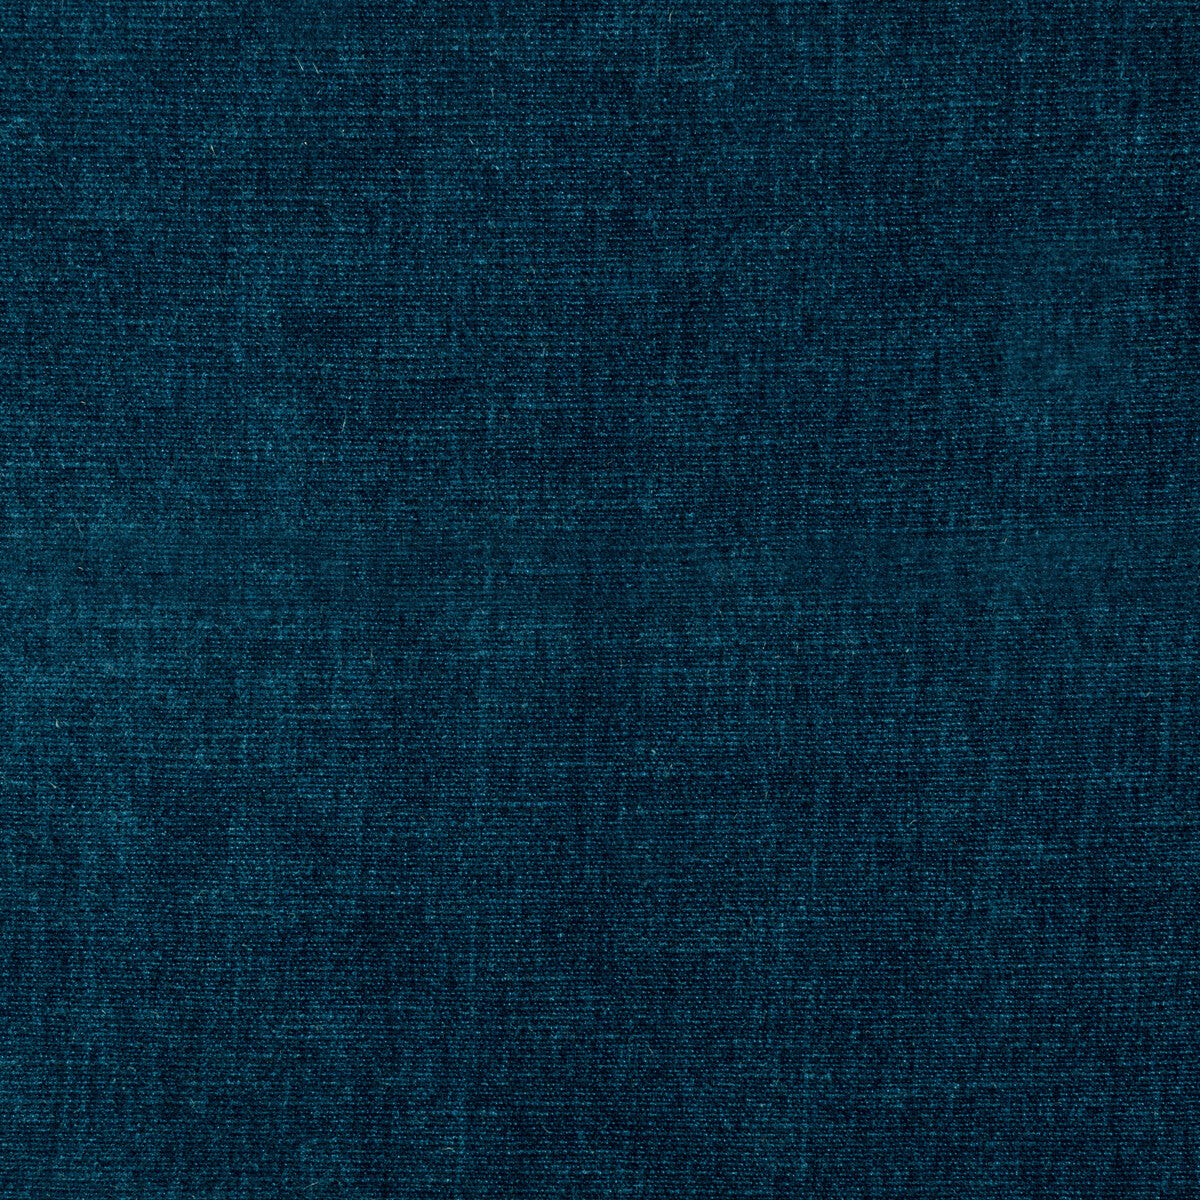 Kravet Smart fabric in 36076-505 color - pattern 36076.505.0 - by Kravet Smart in the Performance Kravetarmor collection